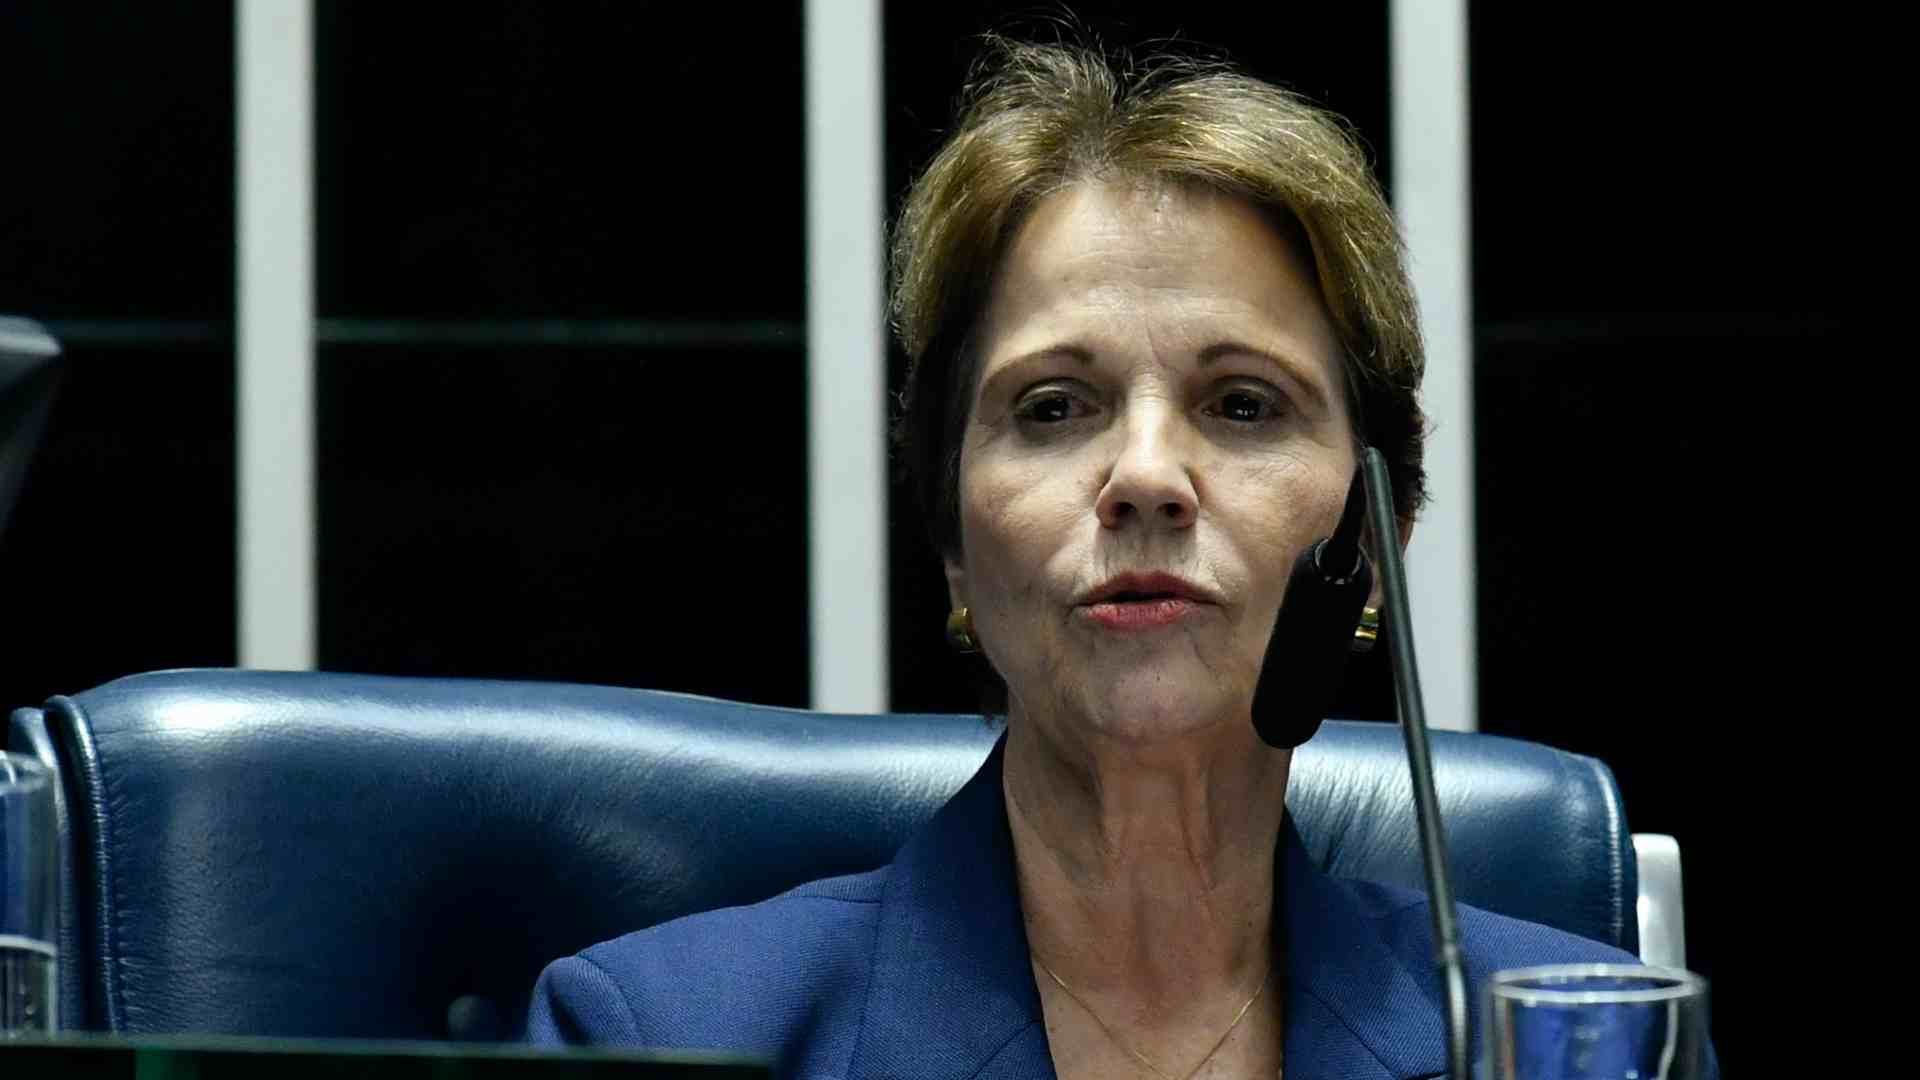 De MS, Tereza Cristina é cotada para disputar presidência do Senado